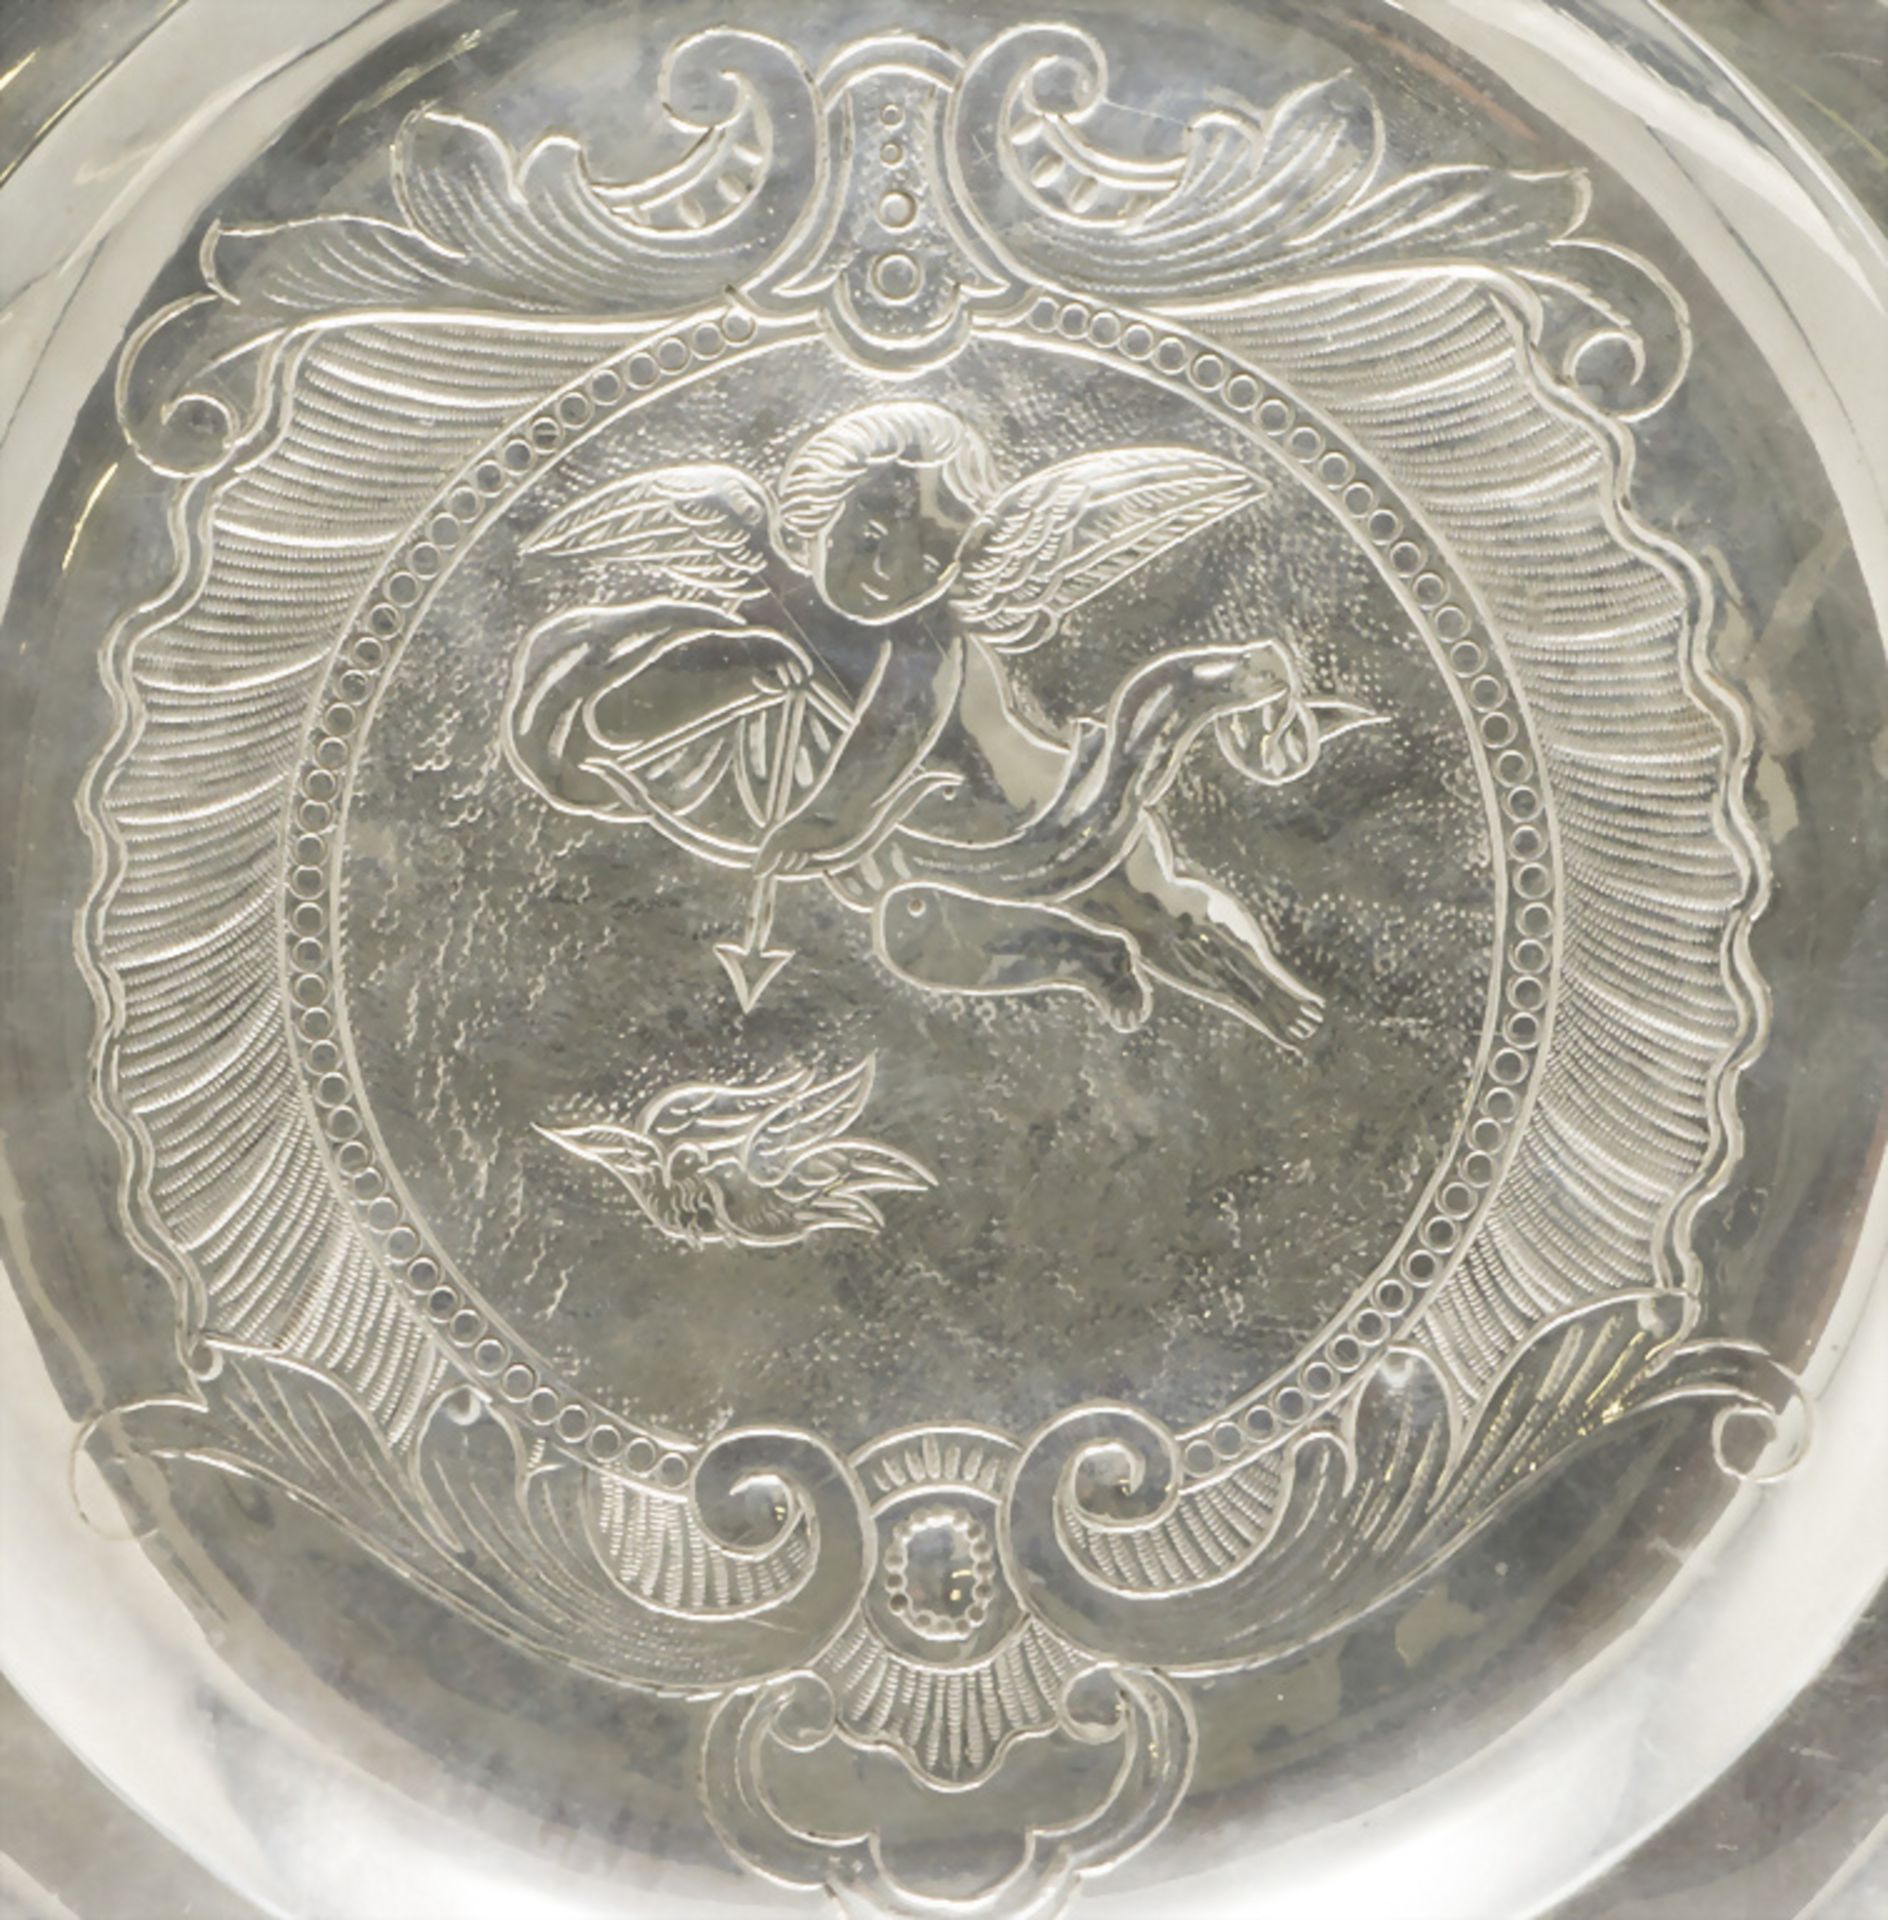 Allianzteller / A silver alliance plate, Claude Genu, Paris, 1744-1750 - Image 2 of 9